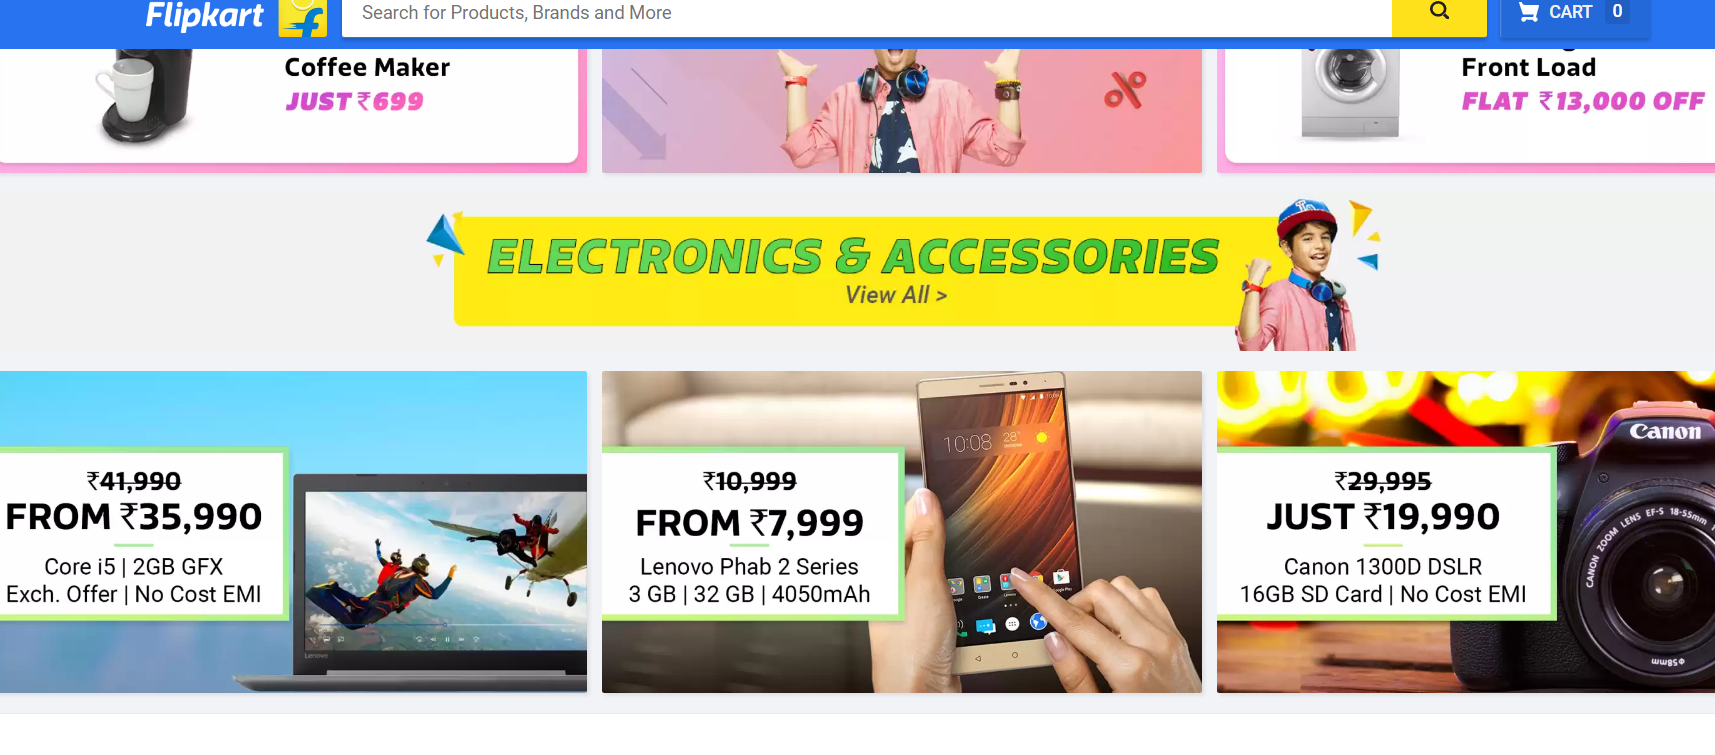 Top Picks from Flipkart Big Billion Days Sale; Big discounts for mobile phones, laptops and cameras 8